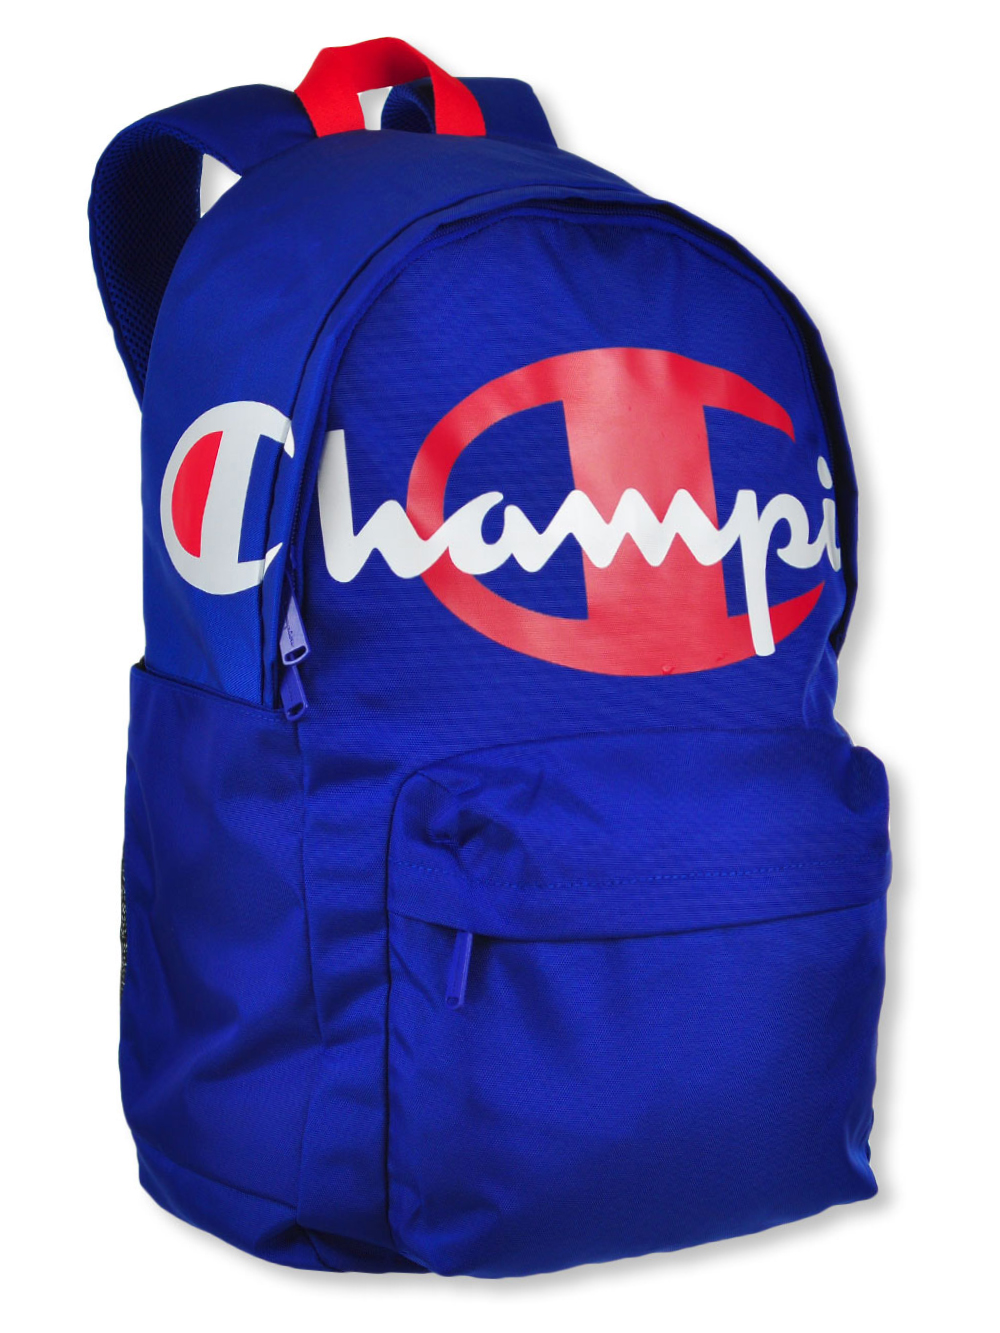 school backpacks champion